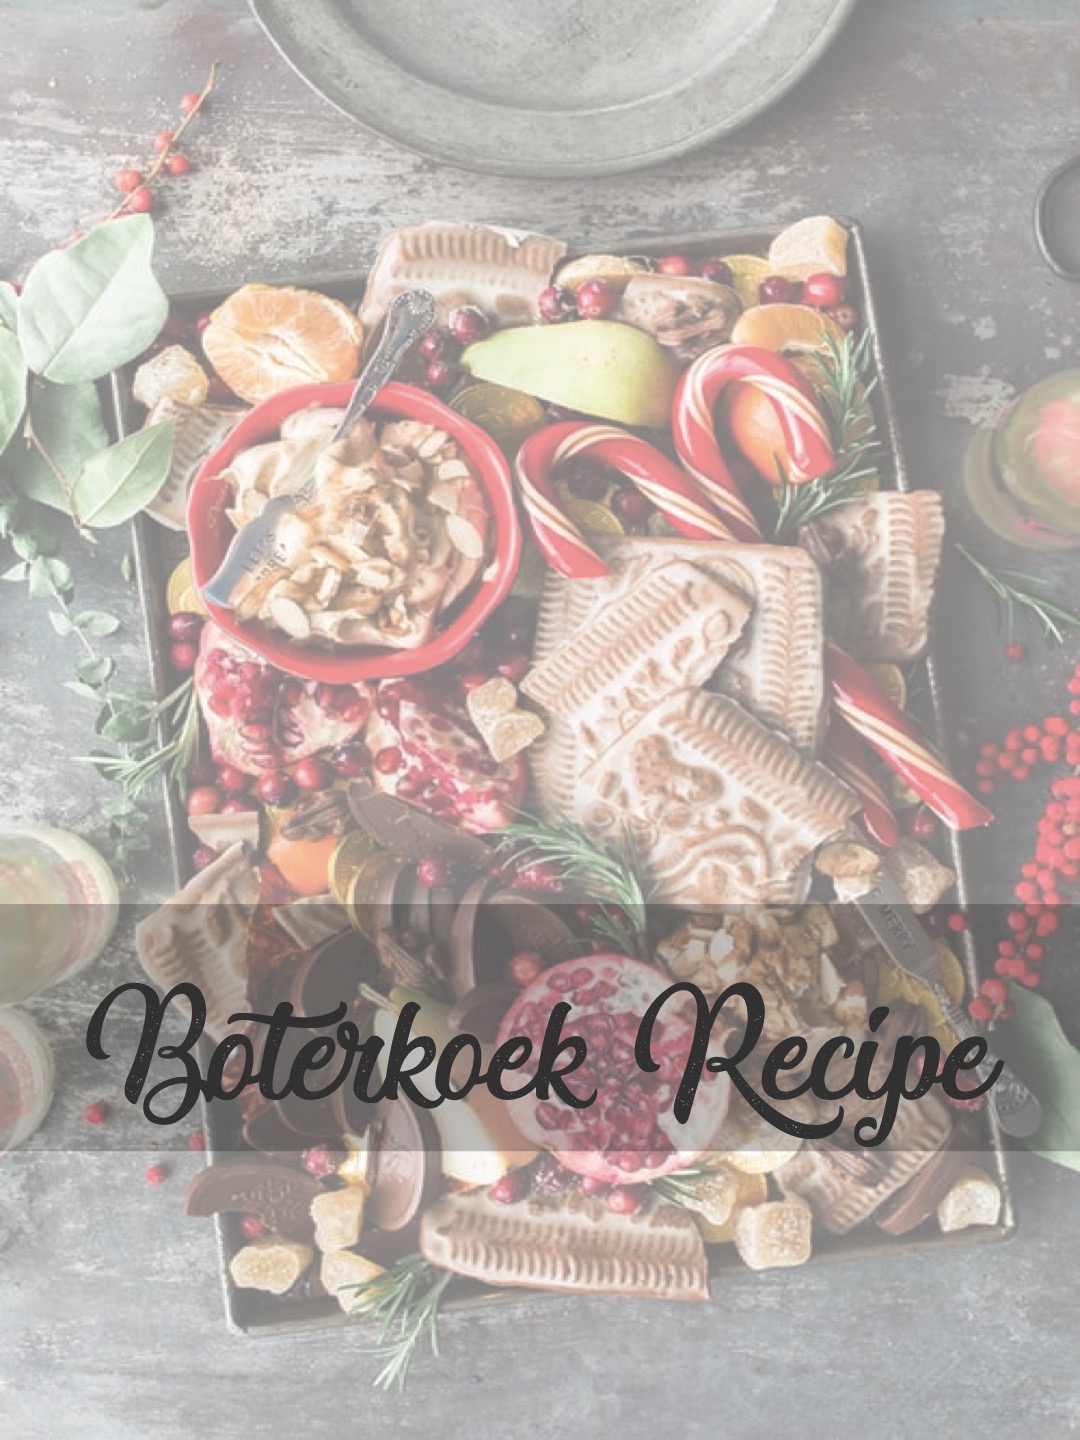 Recipe: how to make Dutch “boterkoek”